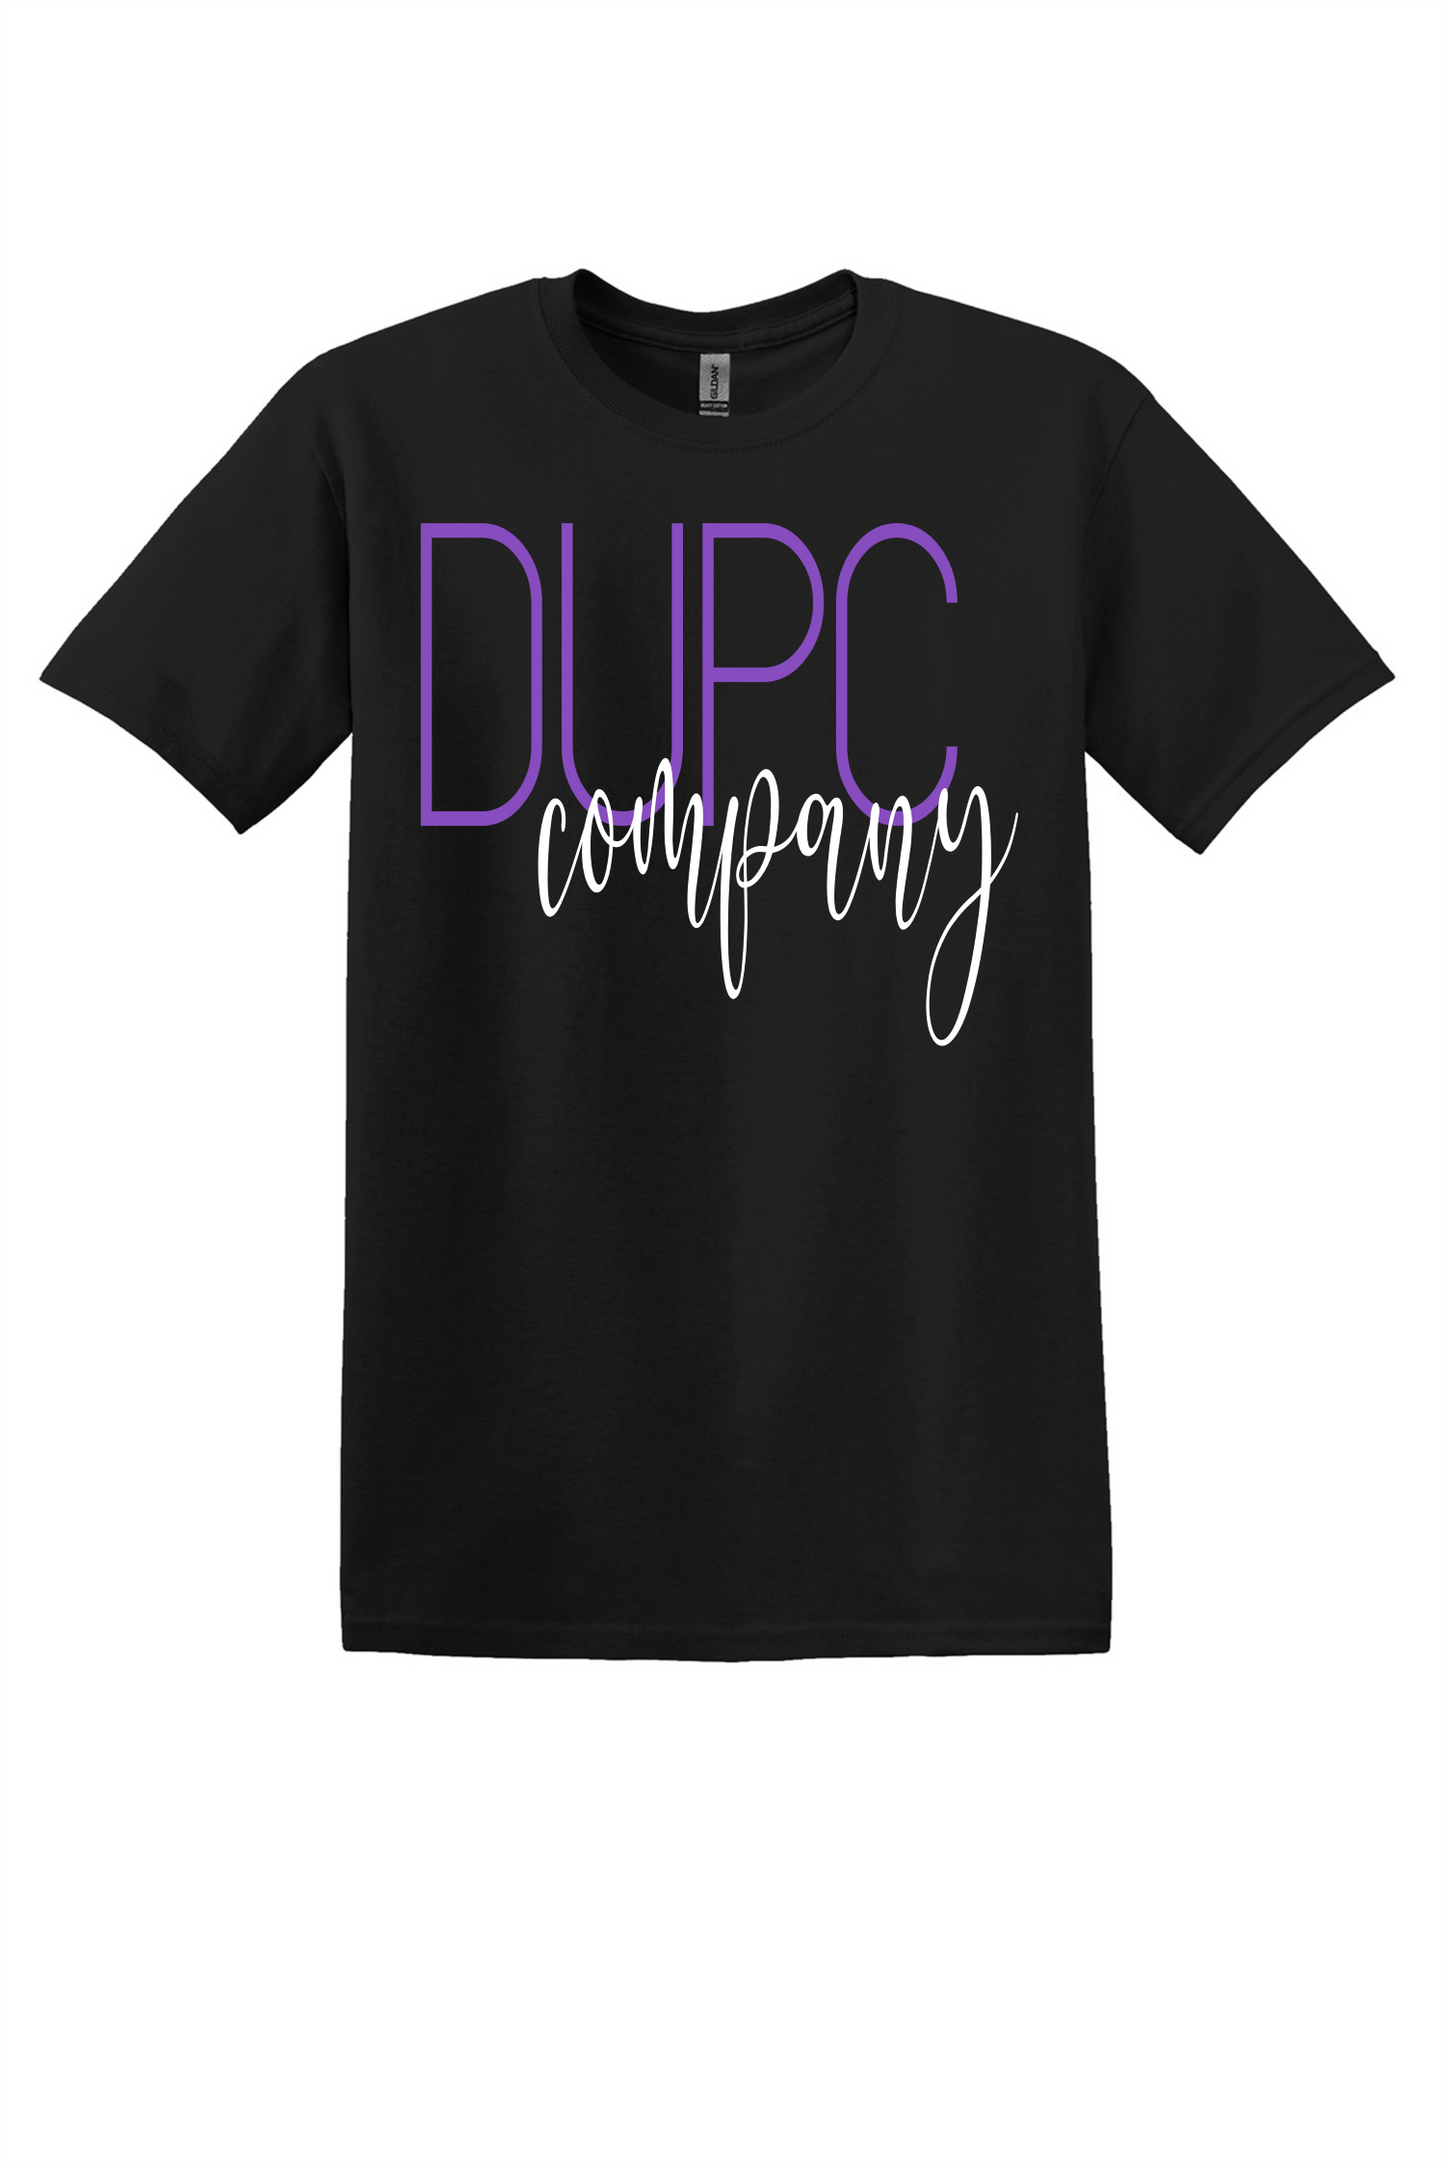 DUPC COMPANY